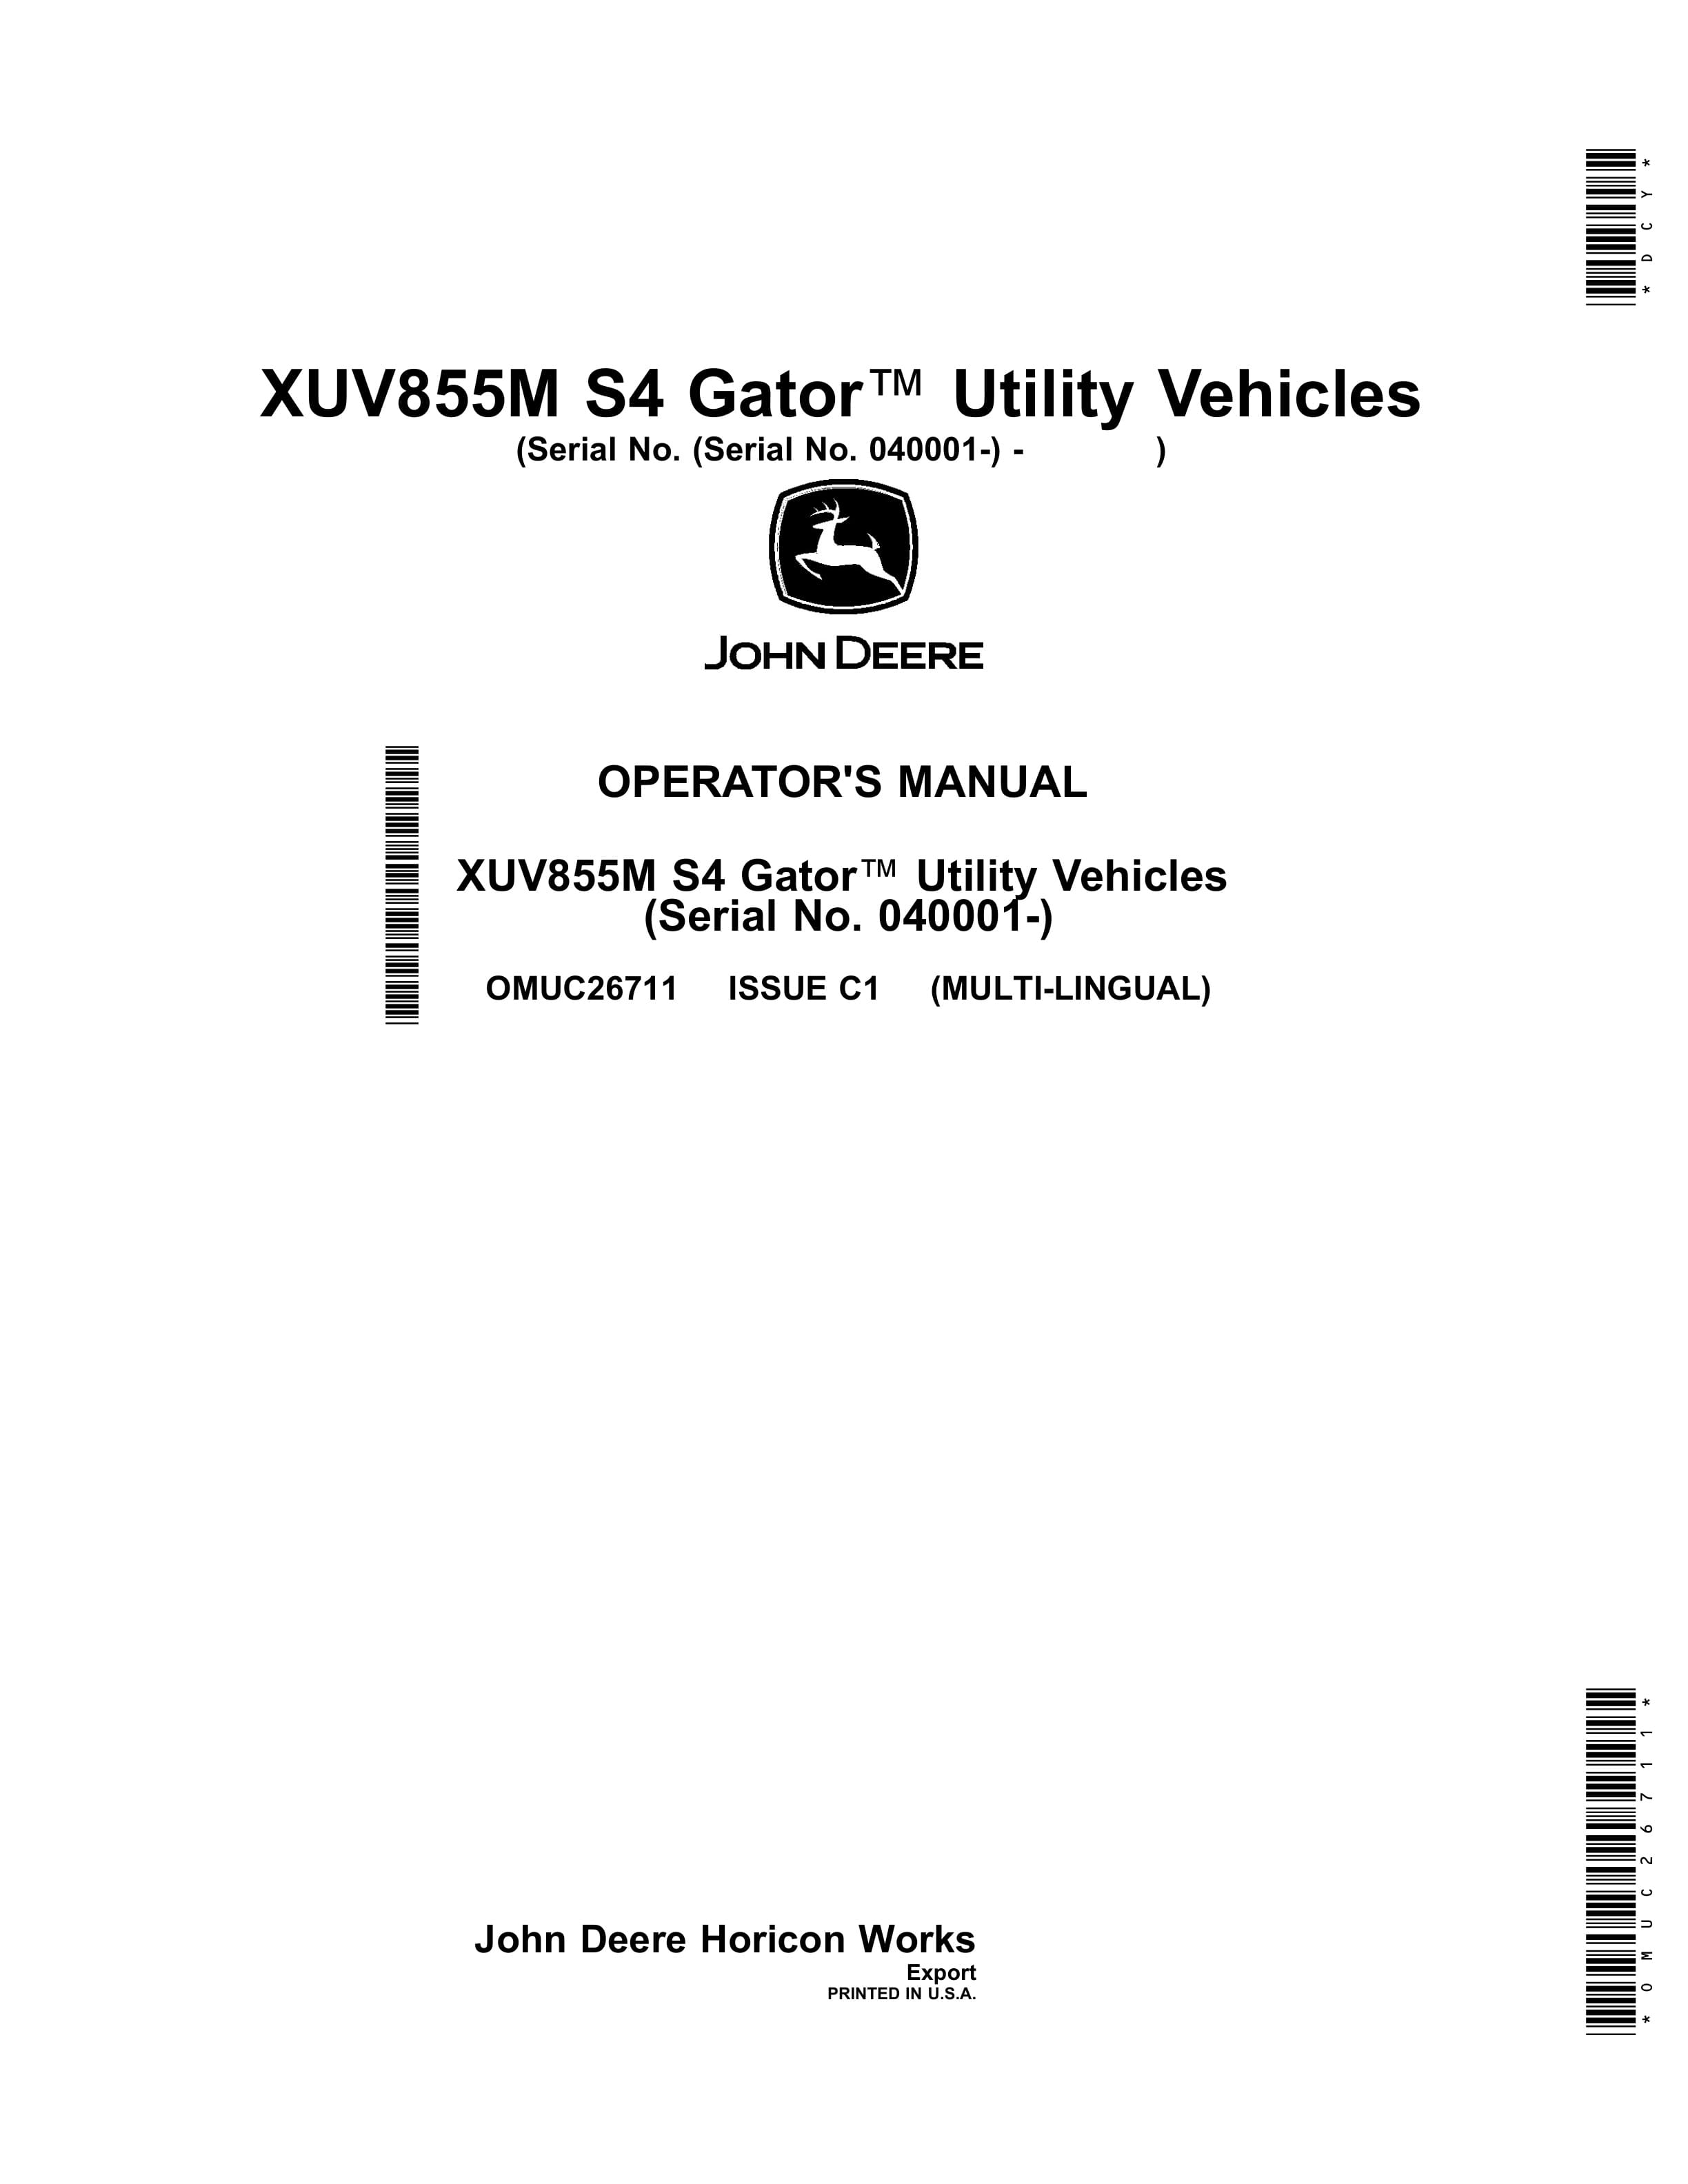 John Deere XUV855M S4 Gator Utility Vehicles Operator Manual OMUC26711 1